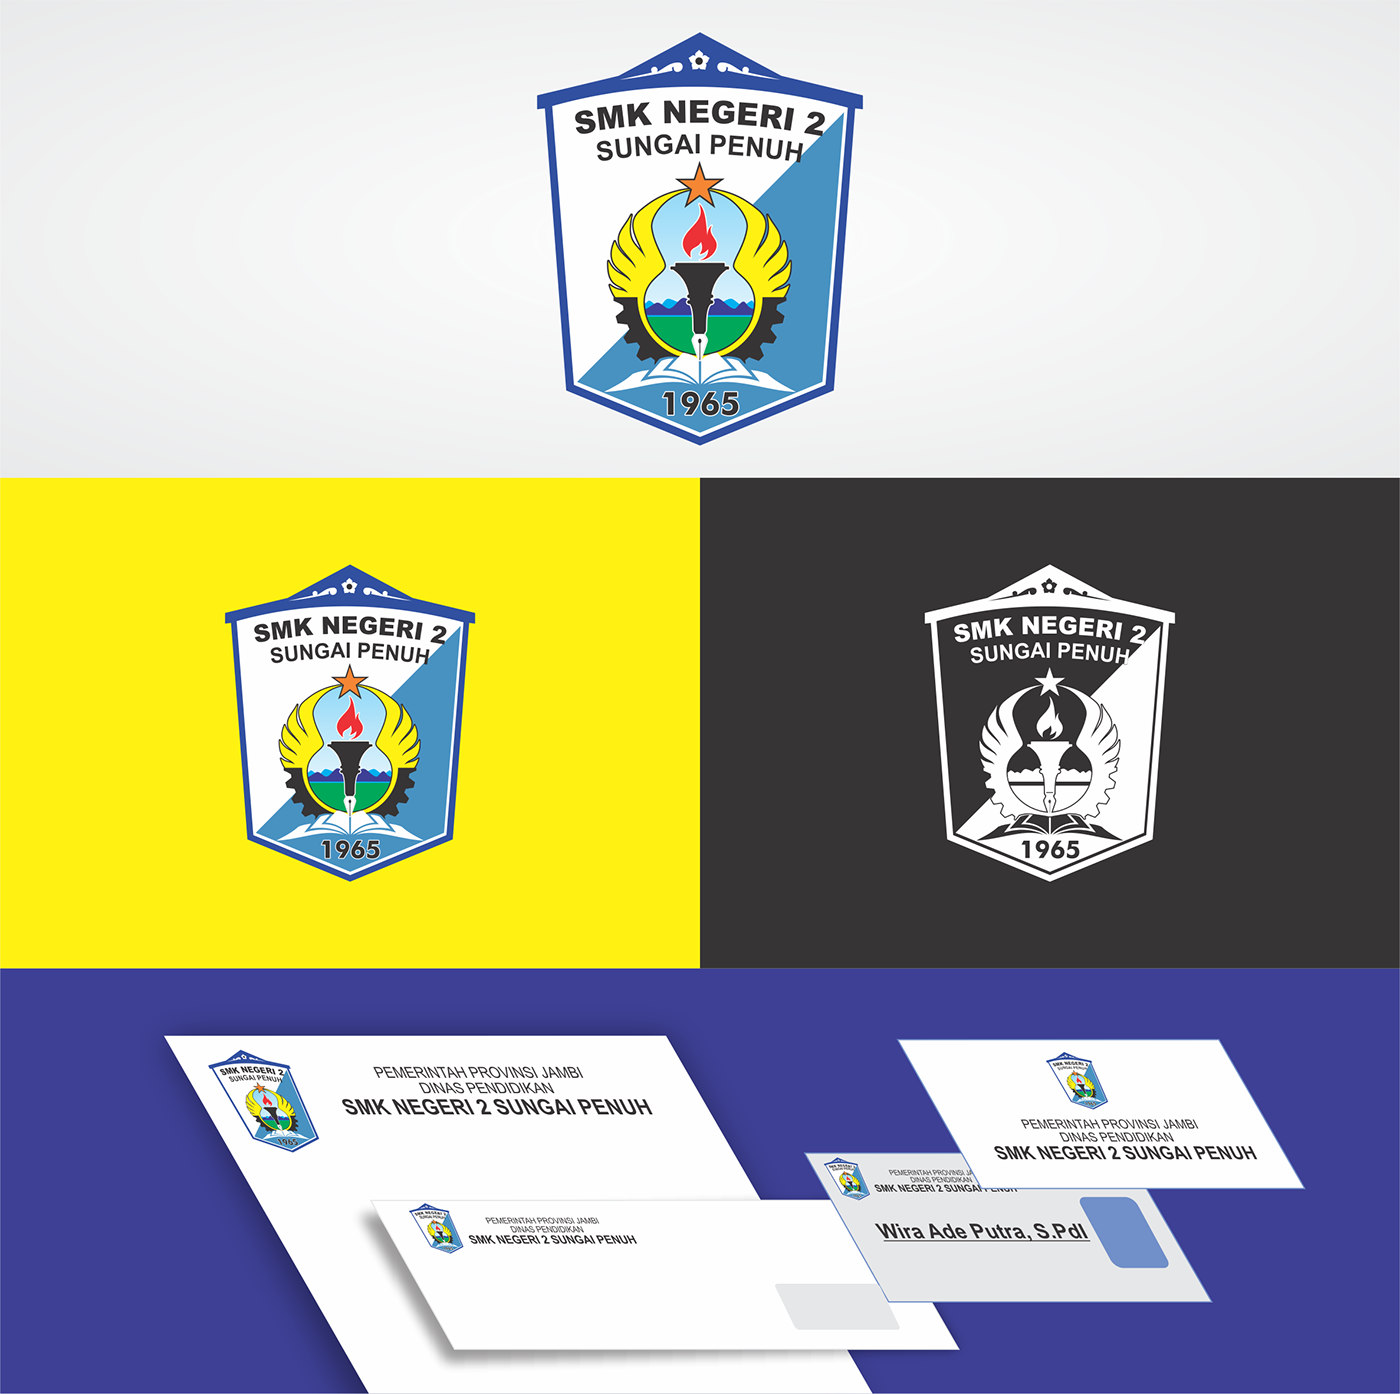 SMK Negeri 2 Sungai Penuh wira logo